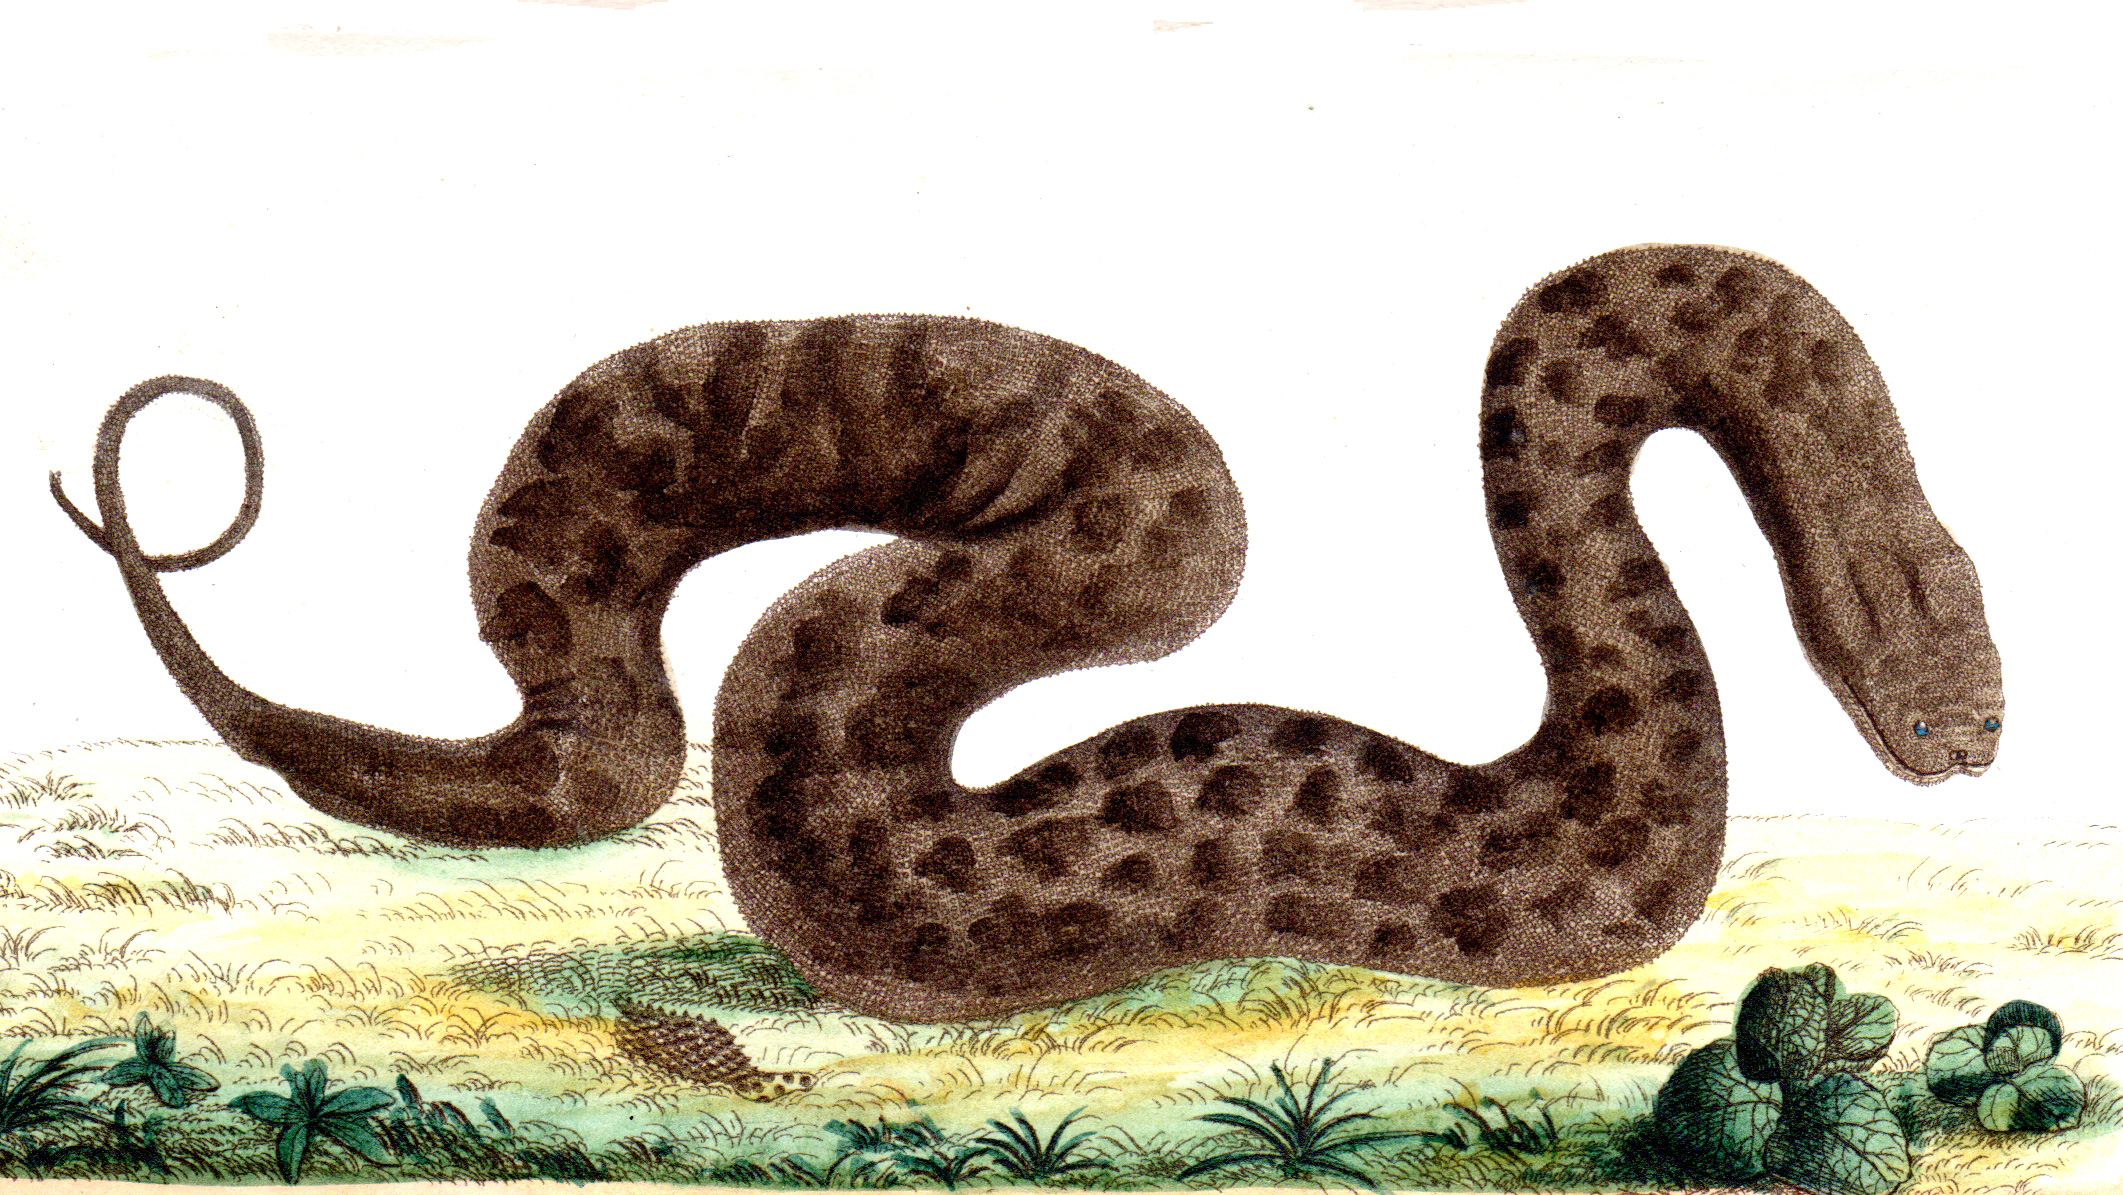 Shaw, George / Nodder, Frederick & Robert P. – Snakes, Eels, etc.